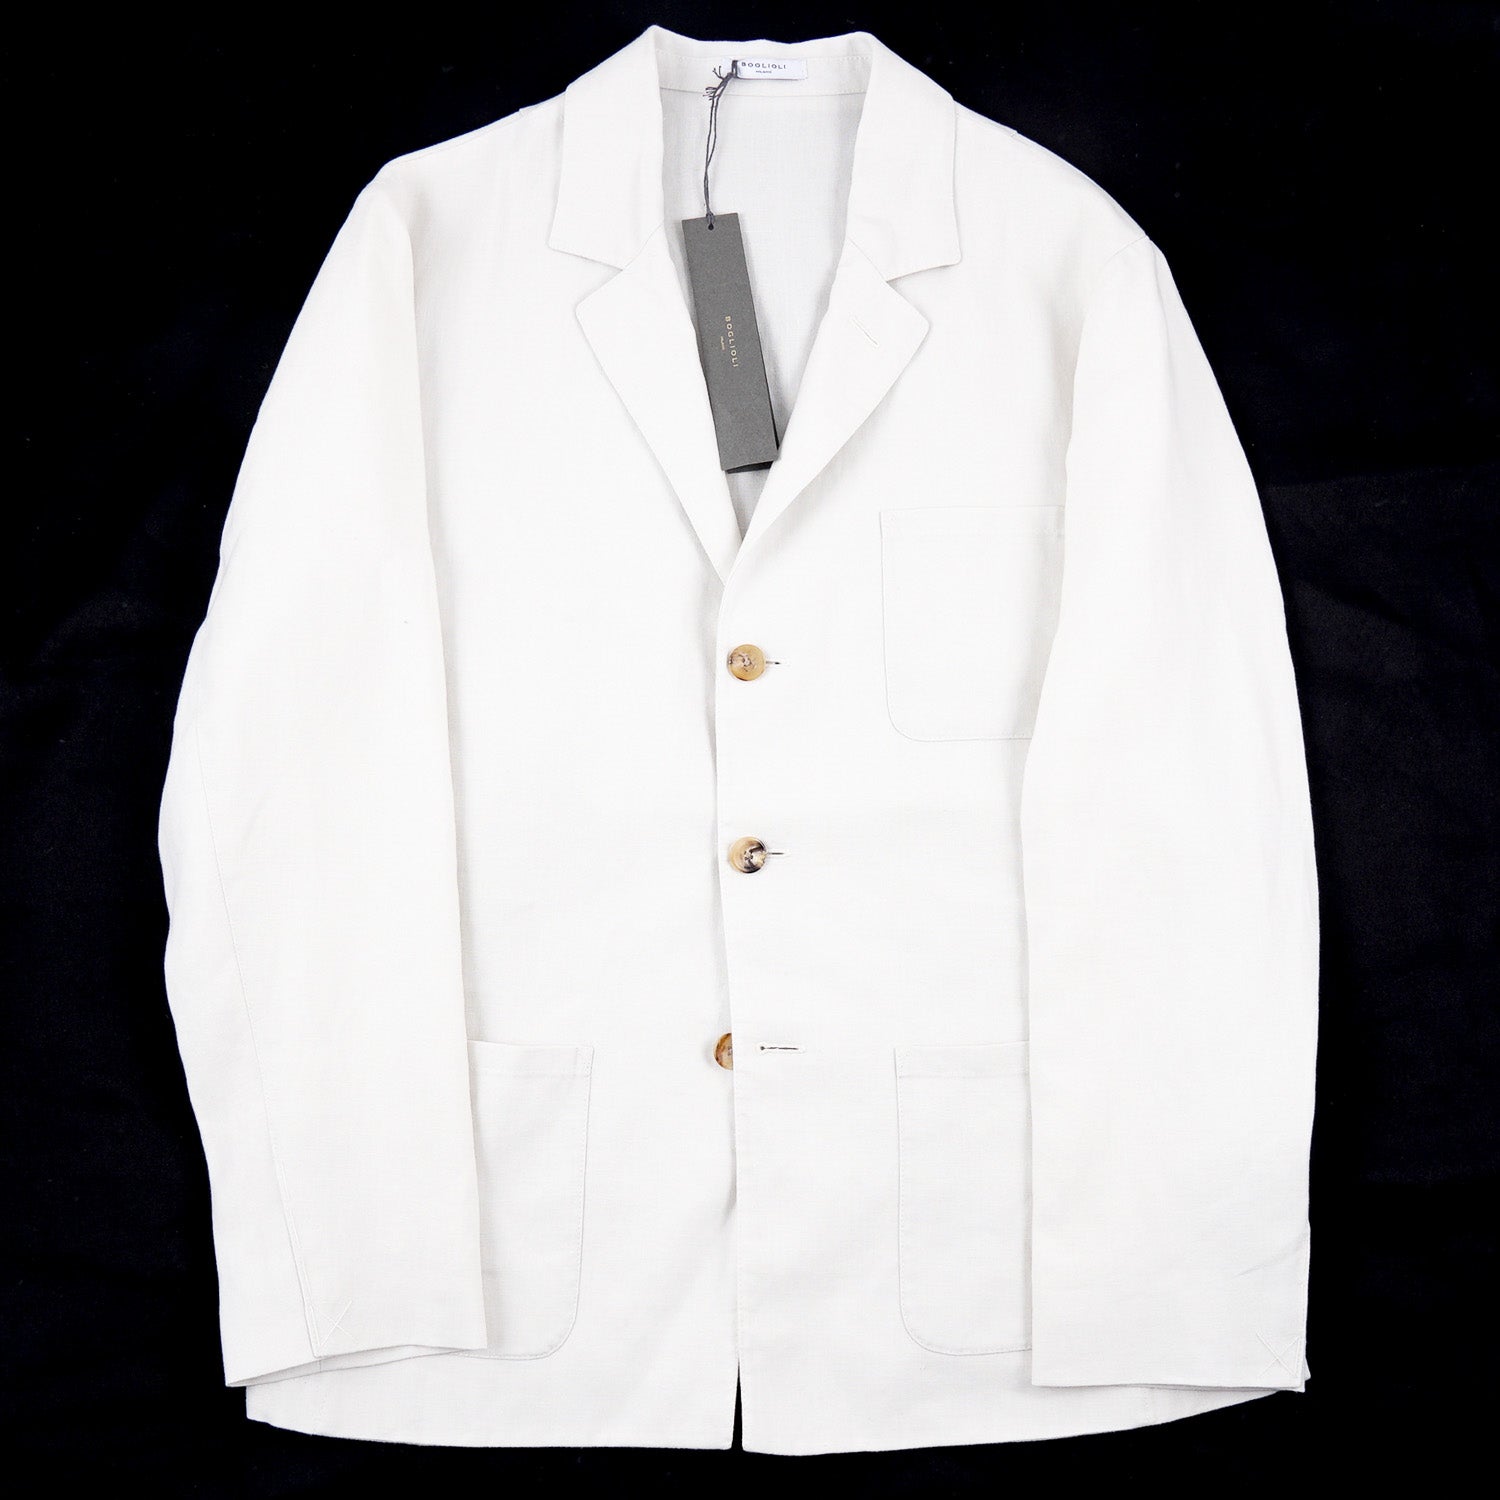 Boglioli Linen 'Picasso Jacket' Sport Coat - Top Shelf Apparel